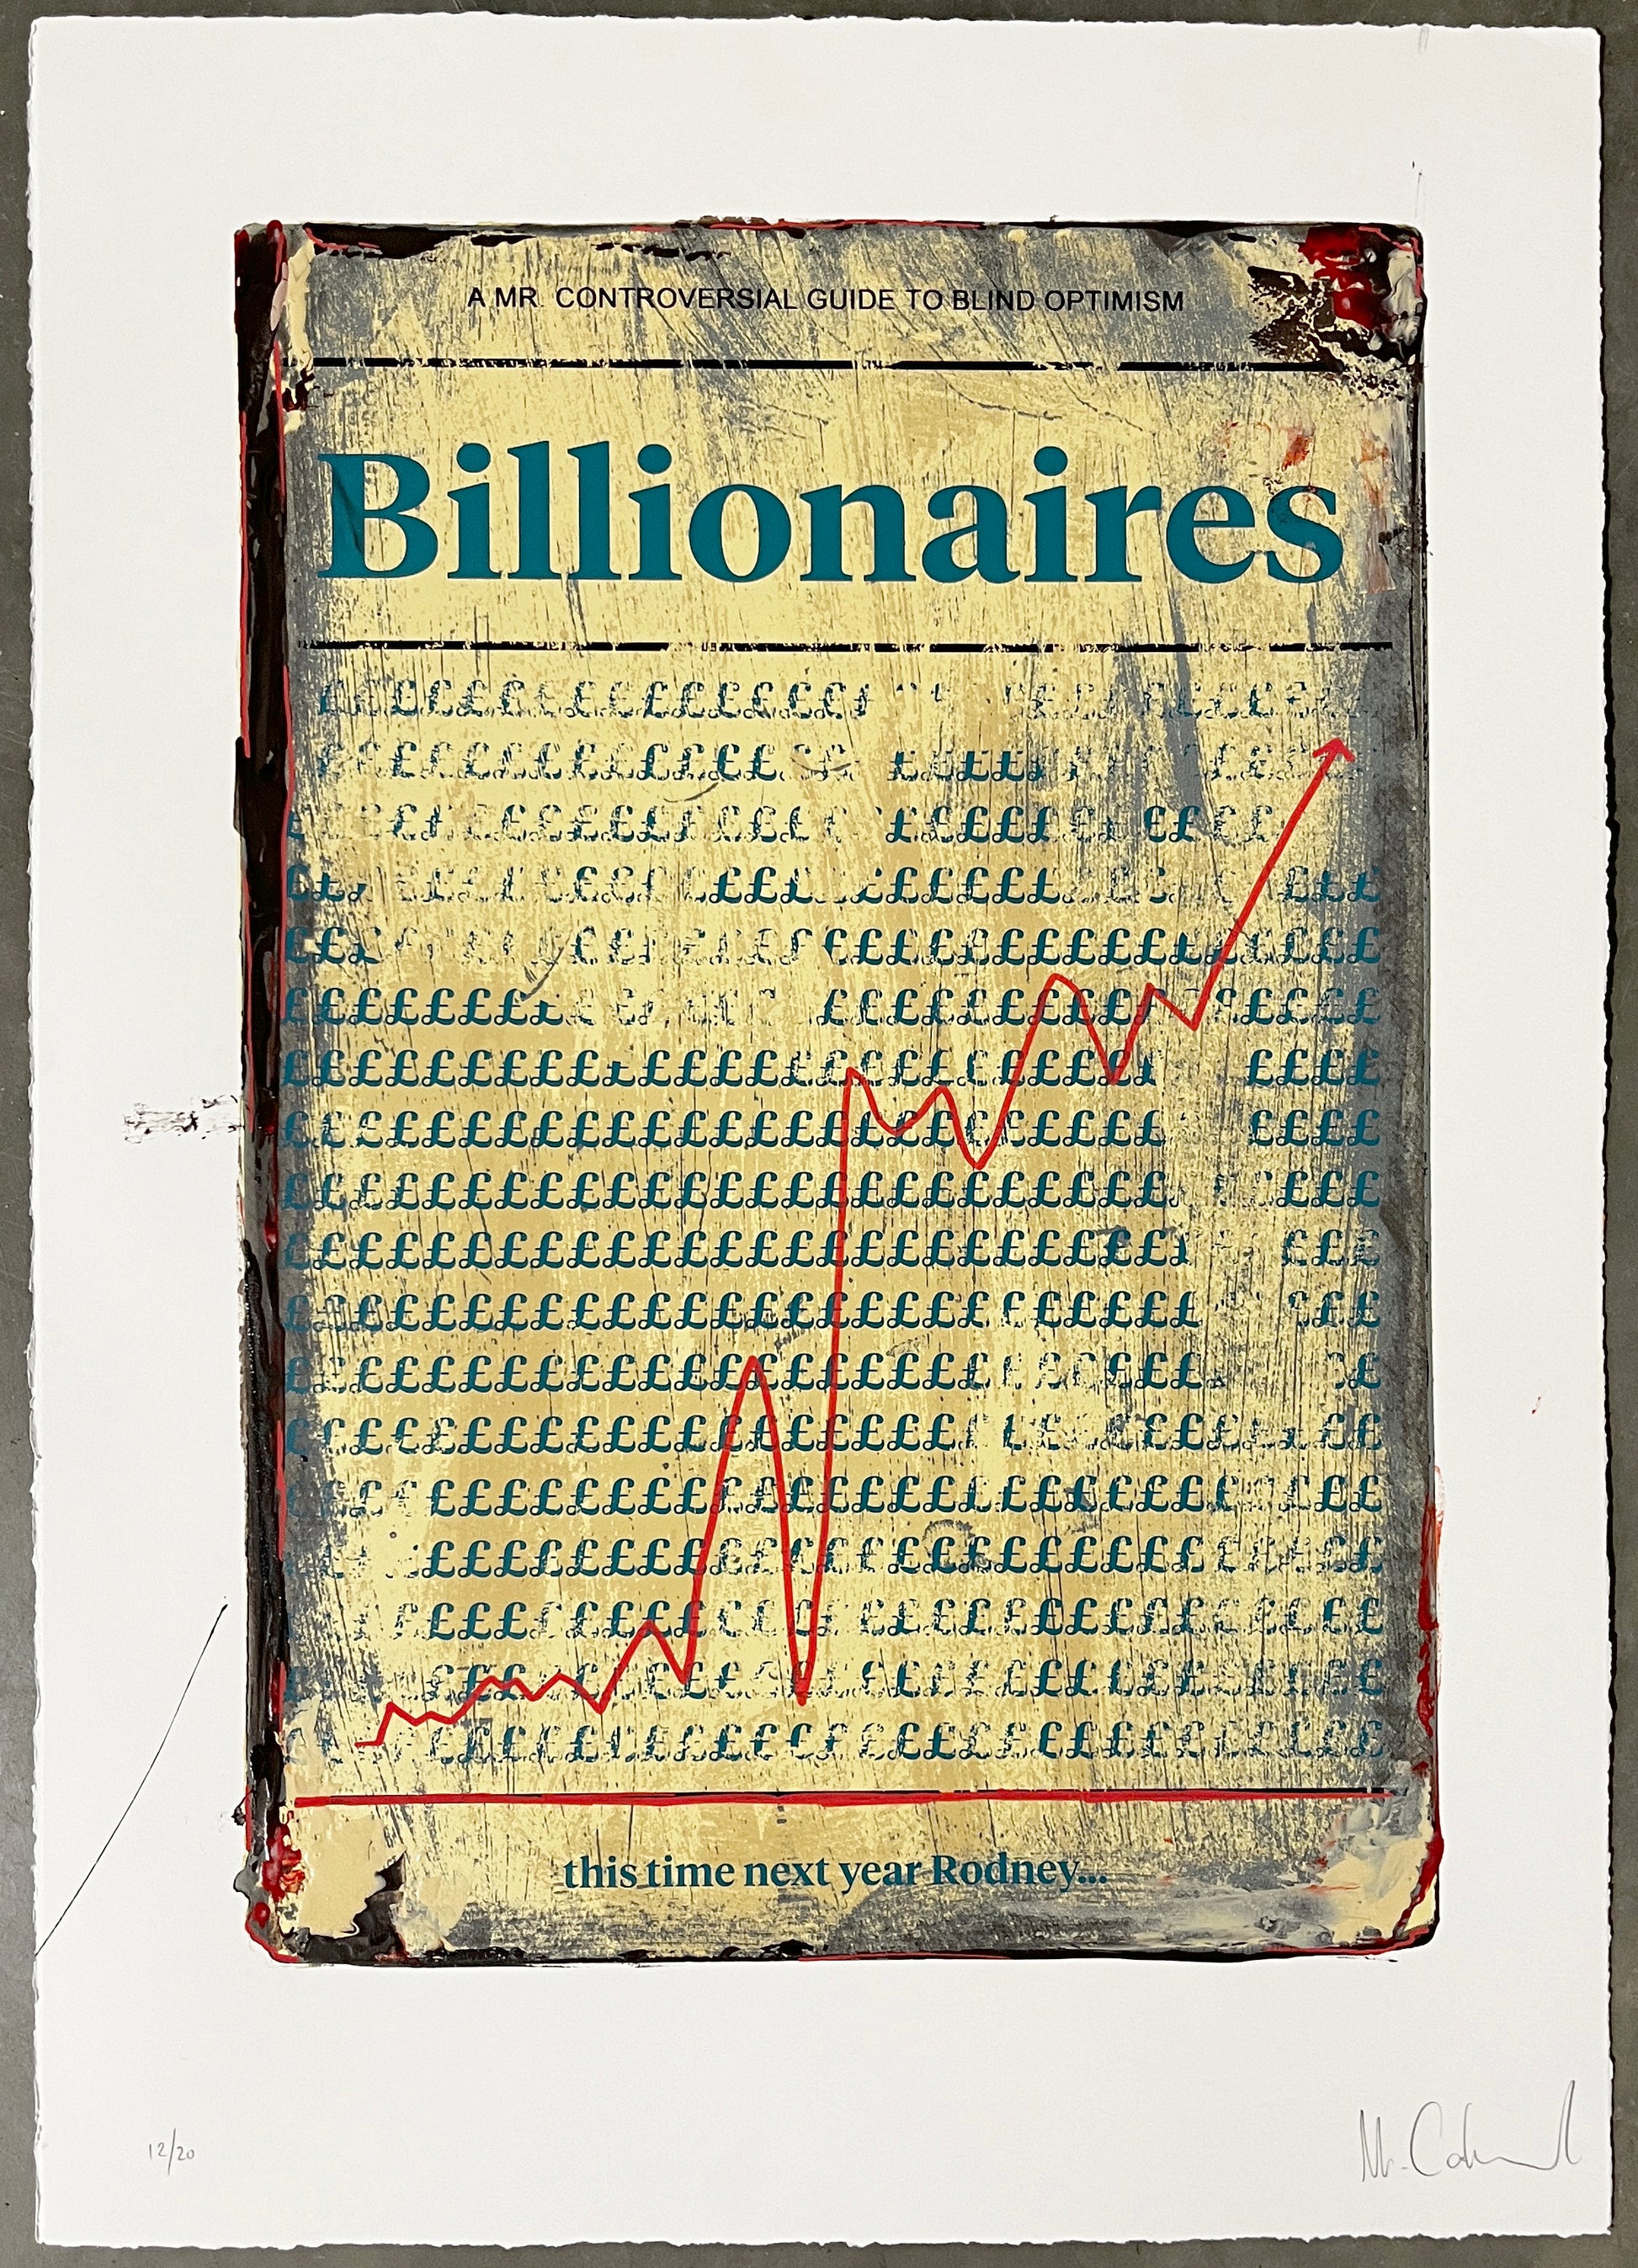 Mr Controversial, Billionaires, Artist, Edition number 12, Limited edition, TAP Galleries, Essex Chelmsford Art Galleries 